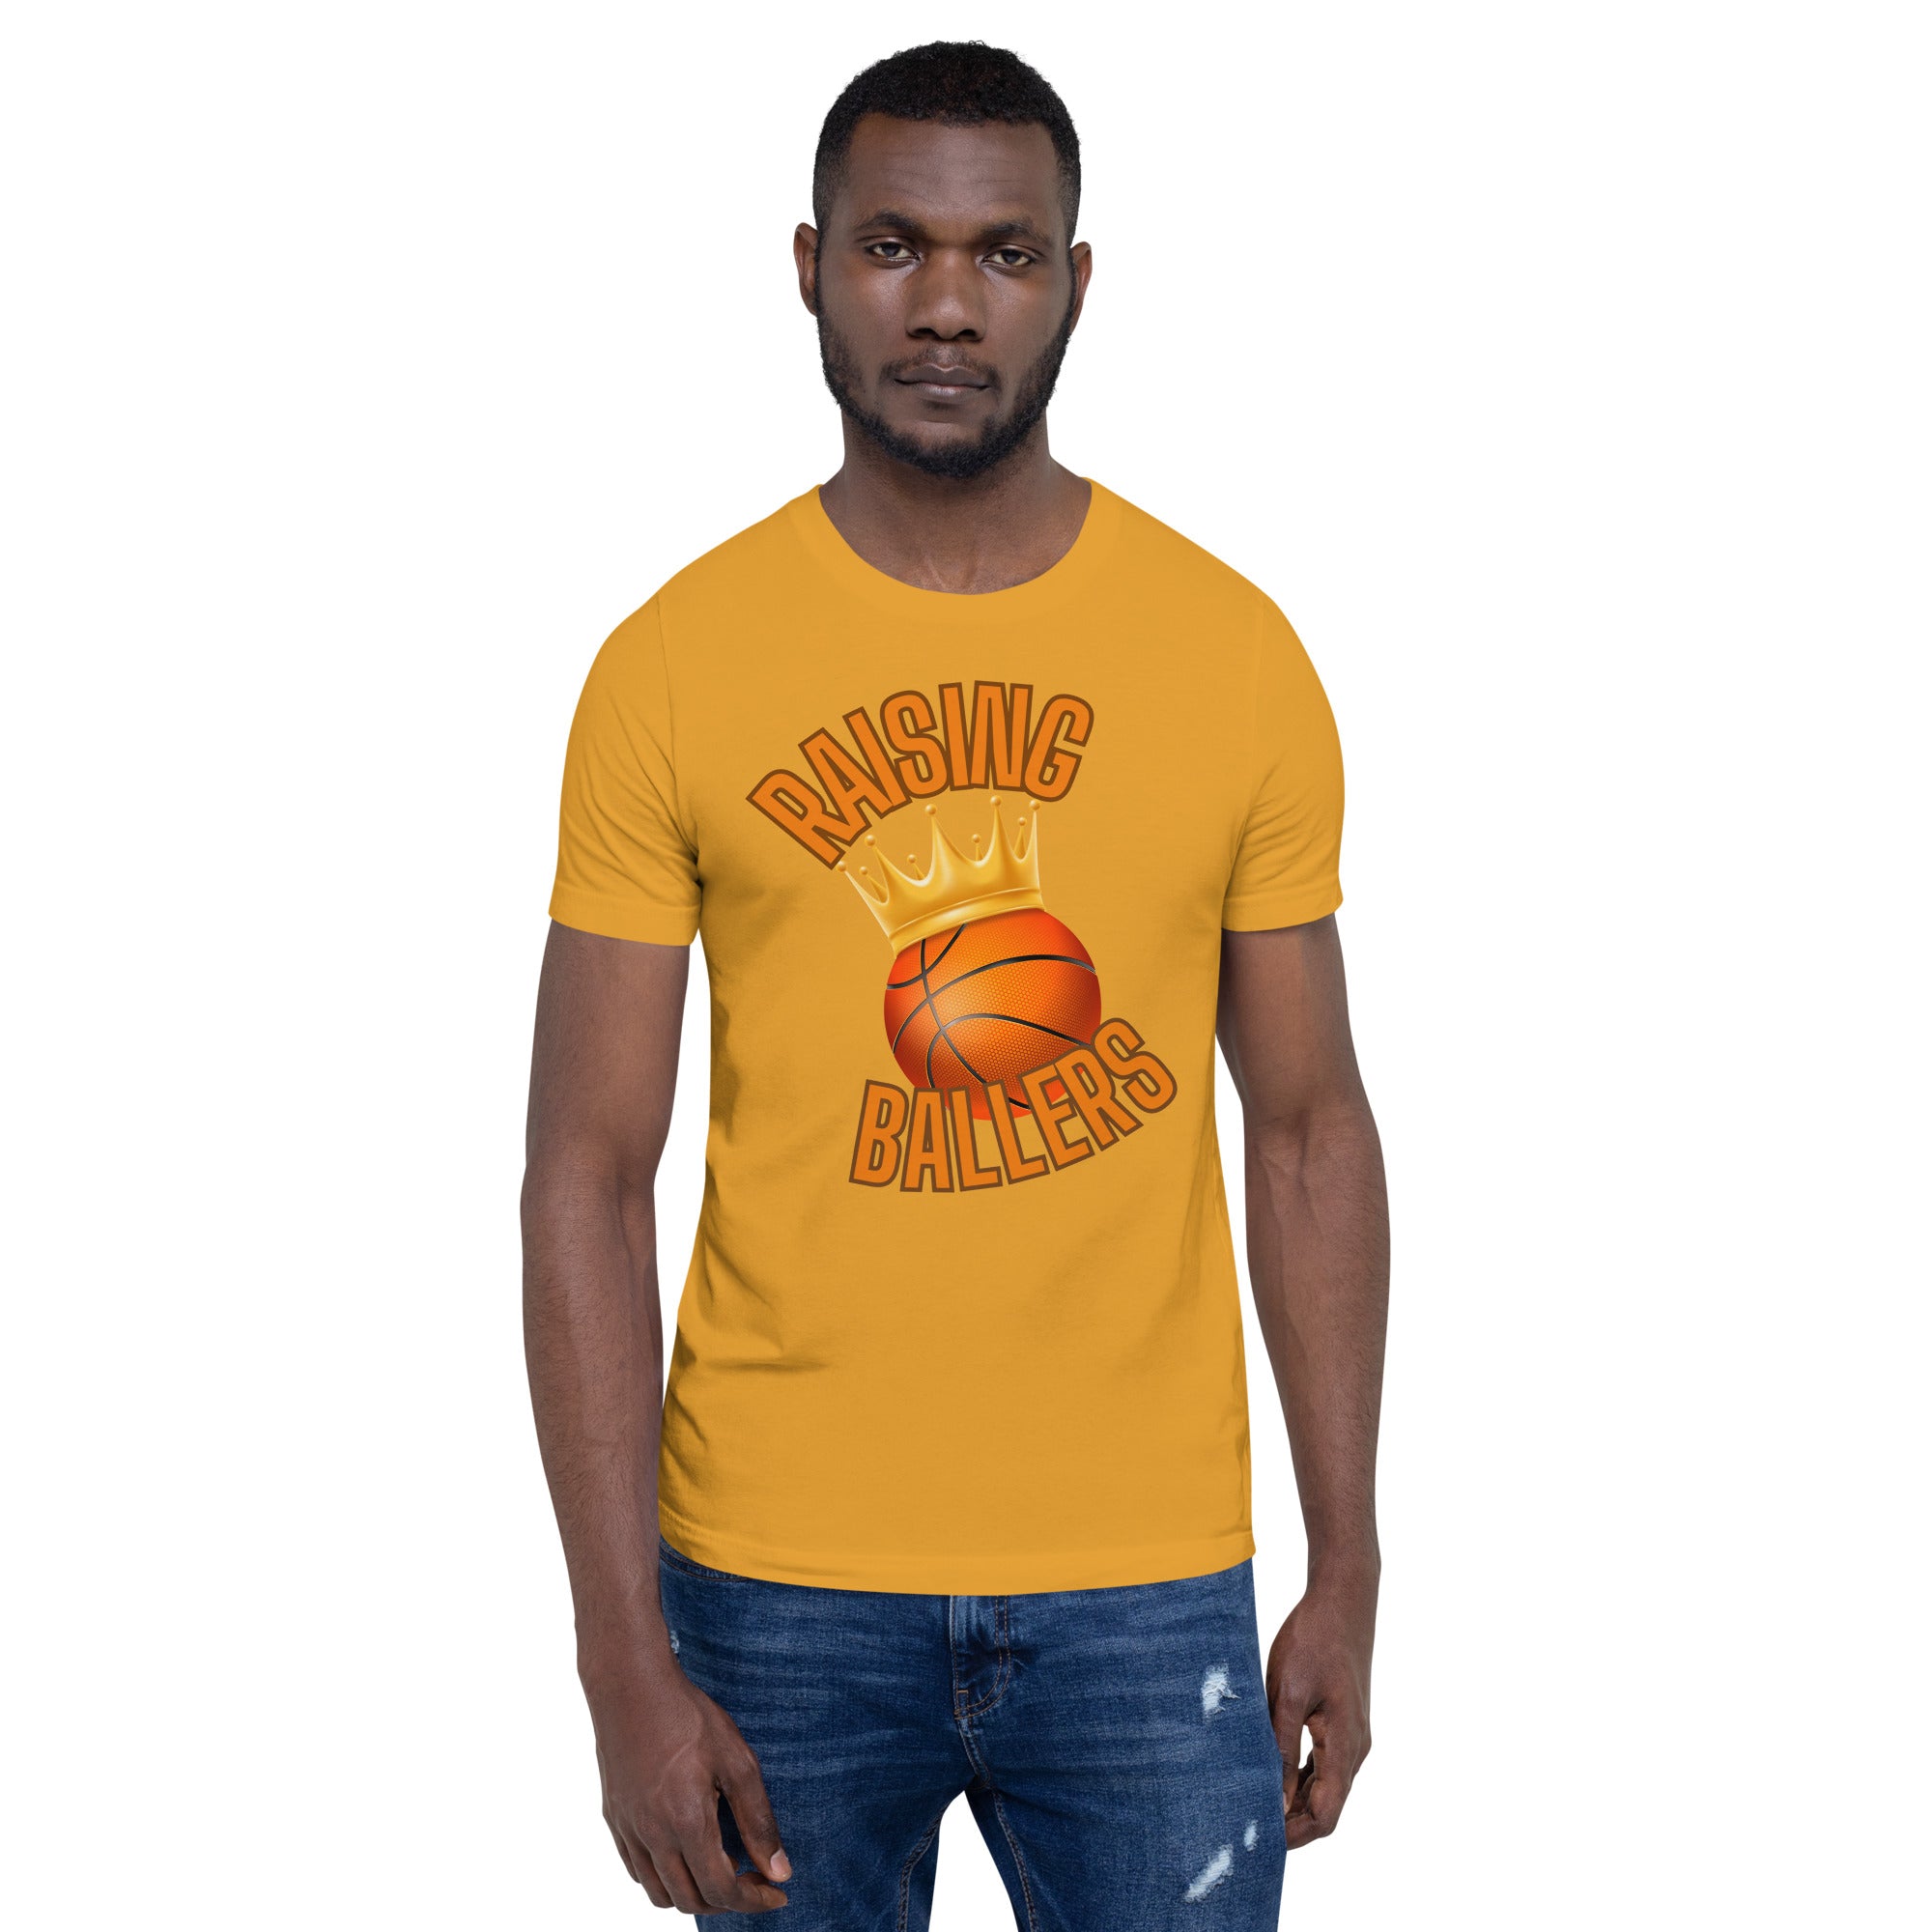 Raising Ballers Premium Men's T-Shirt